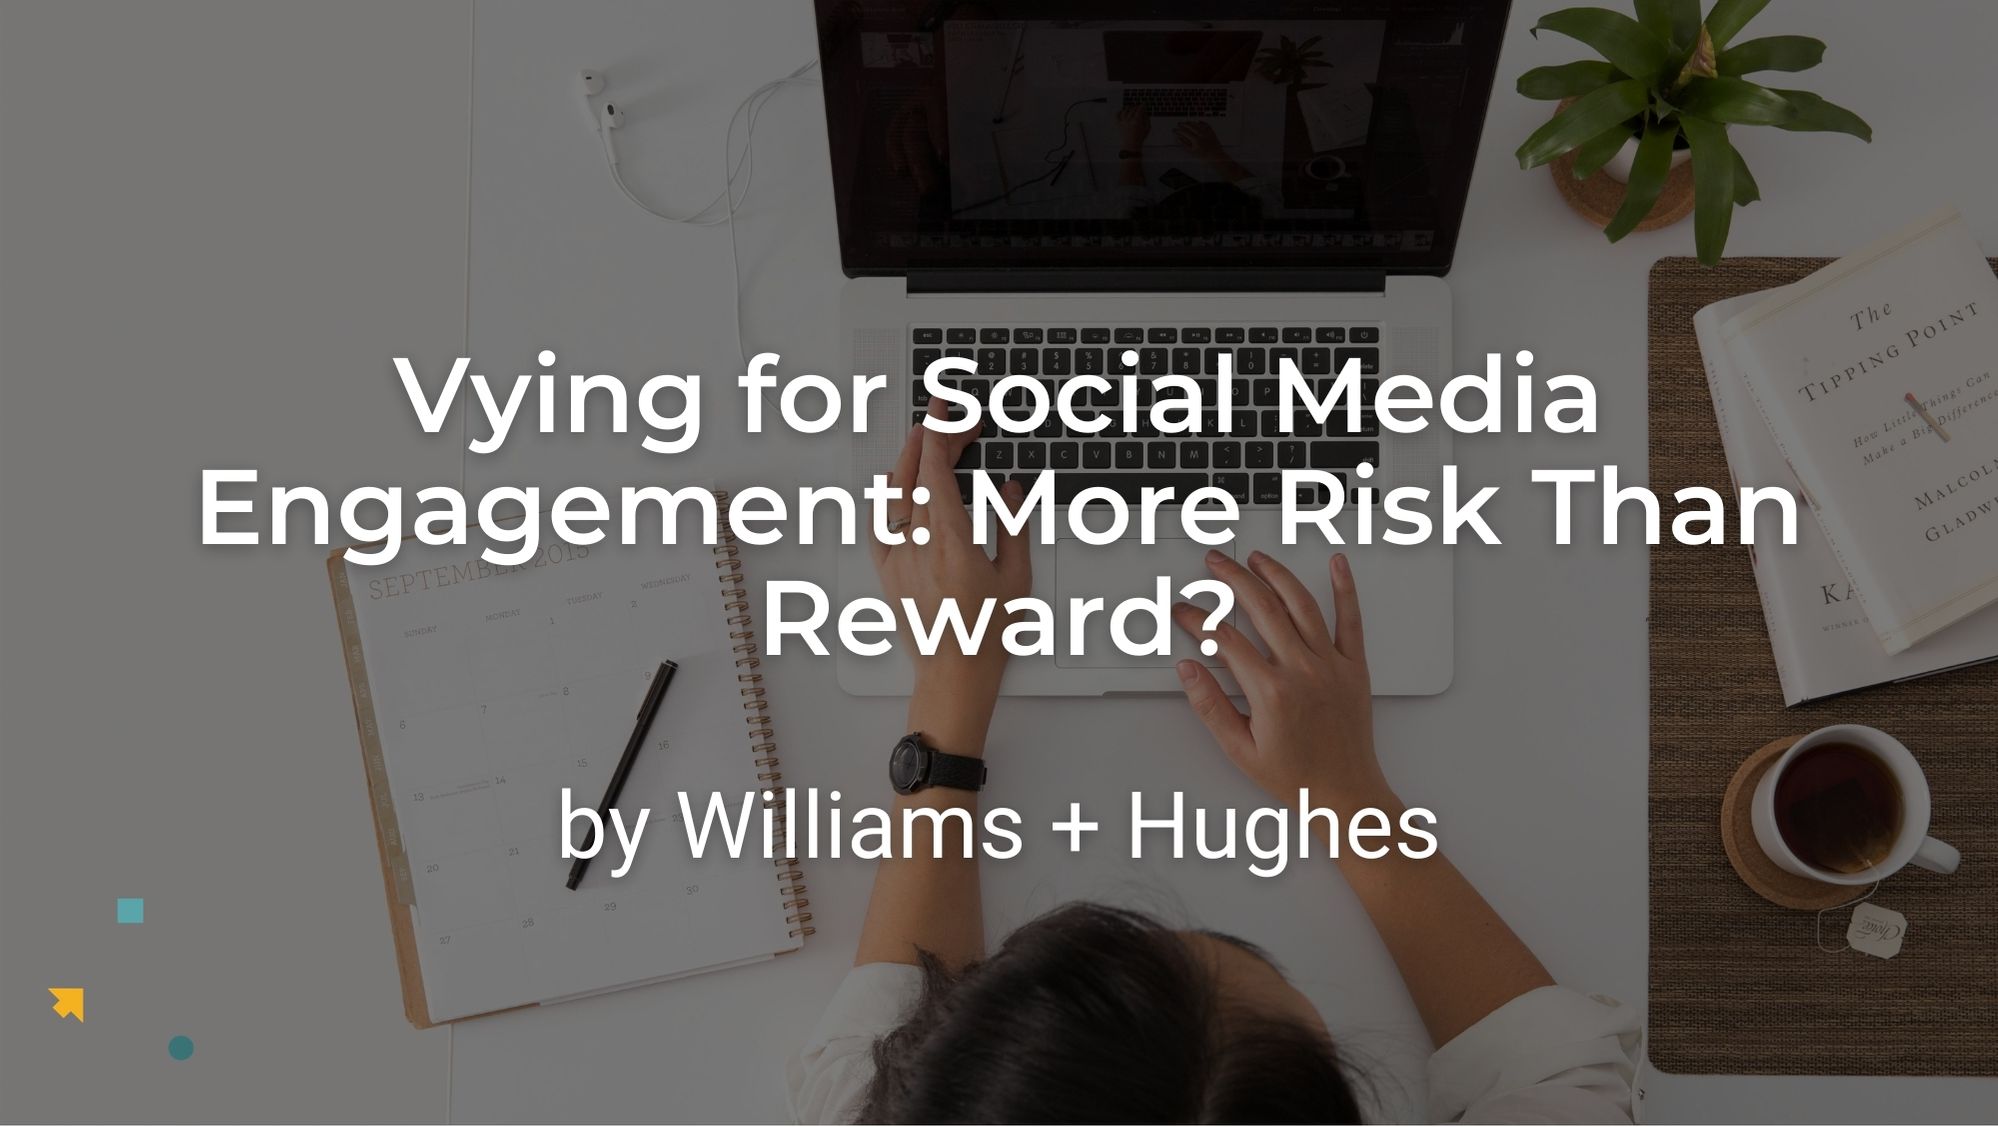 Vying for social media engagement: more risk than reward?